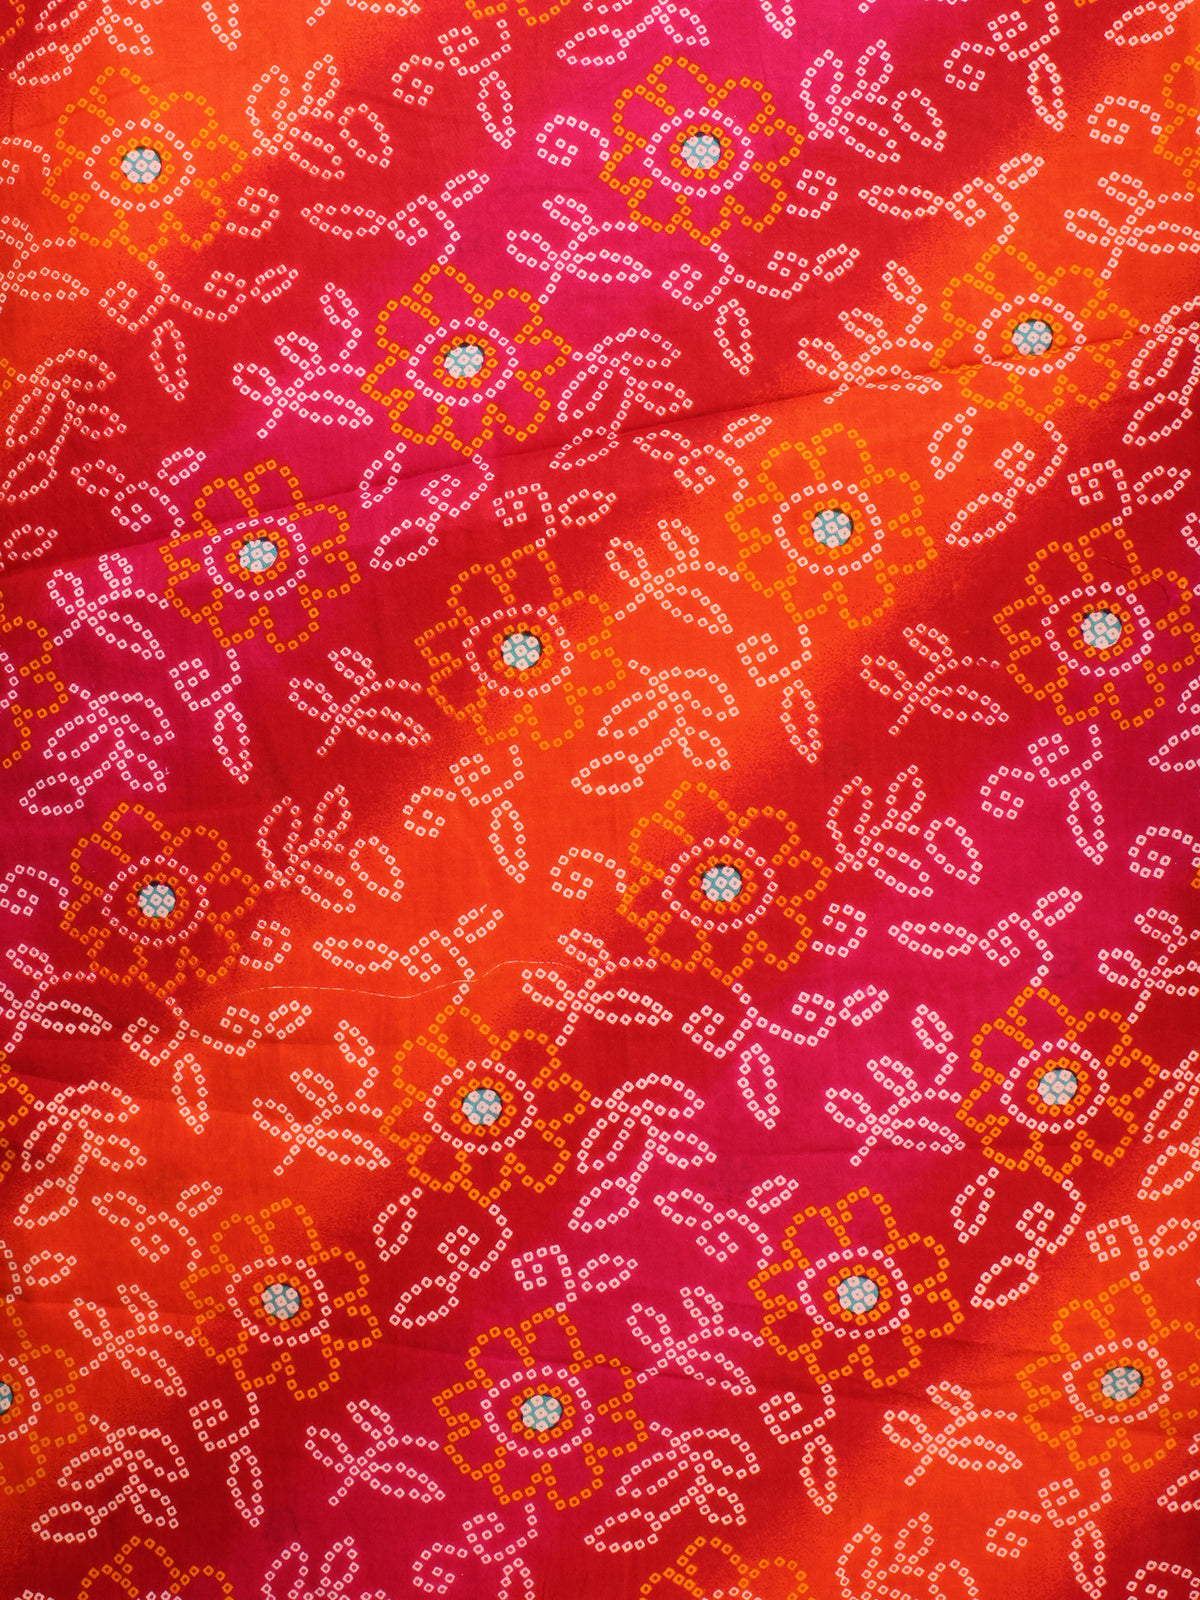 Hot Pink Orange White Bandhini Printed Cotton Fabric Per Meter - F001F2238